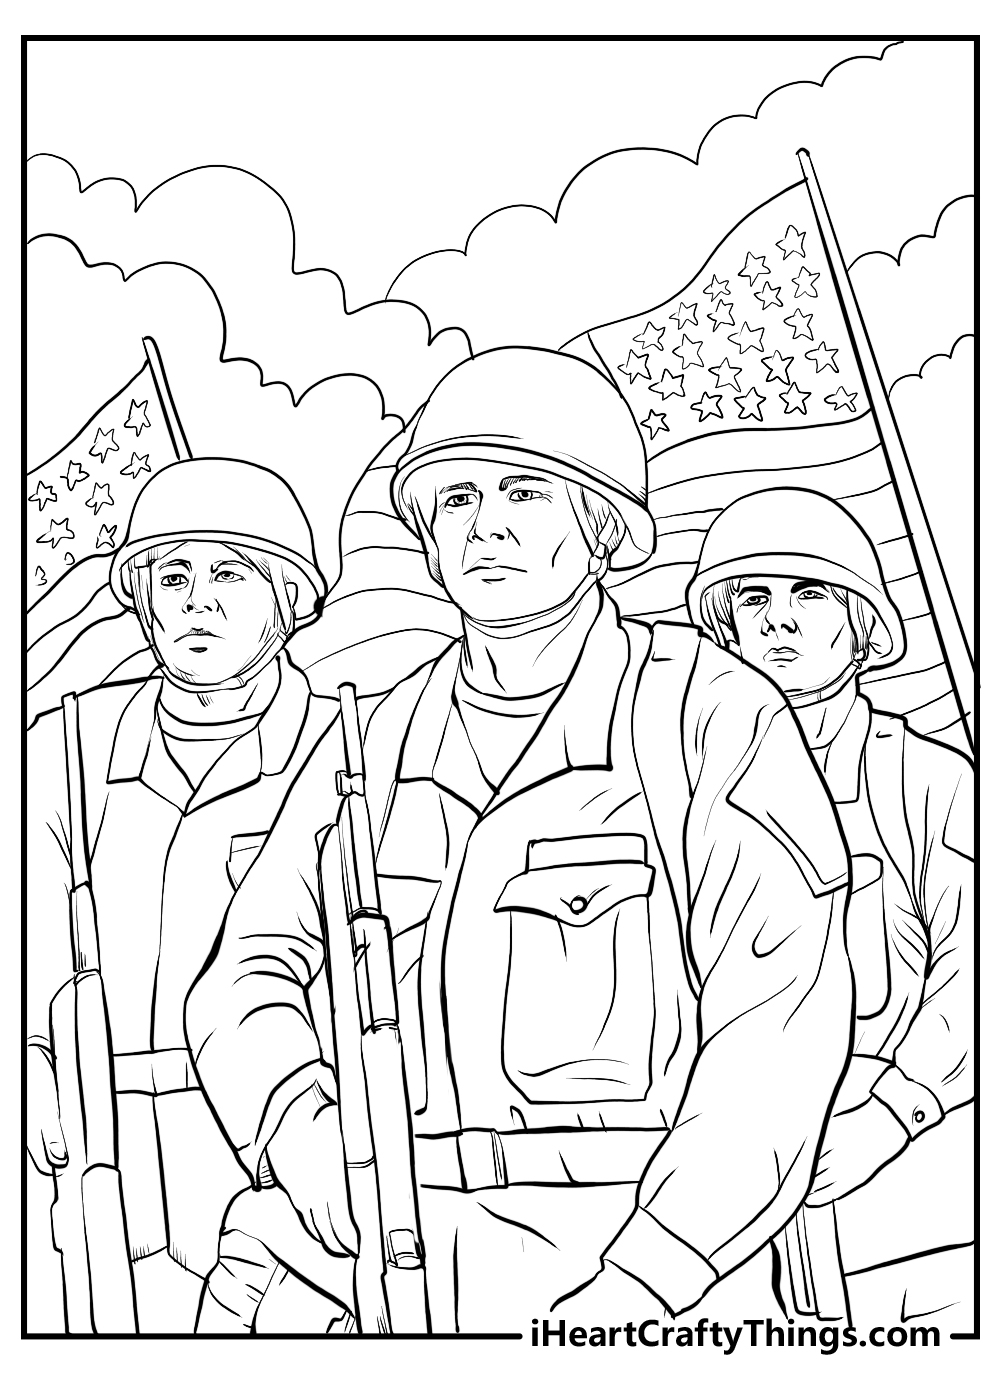 original veterans coloring pages for kids